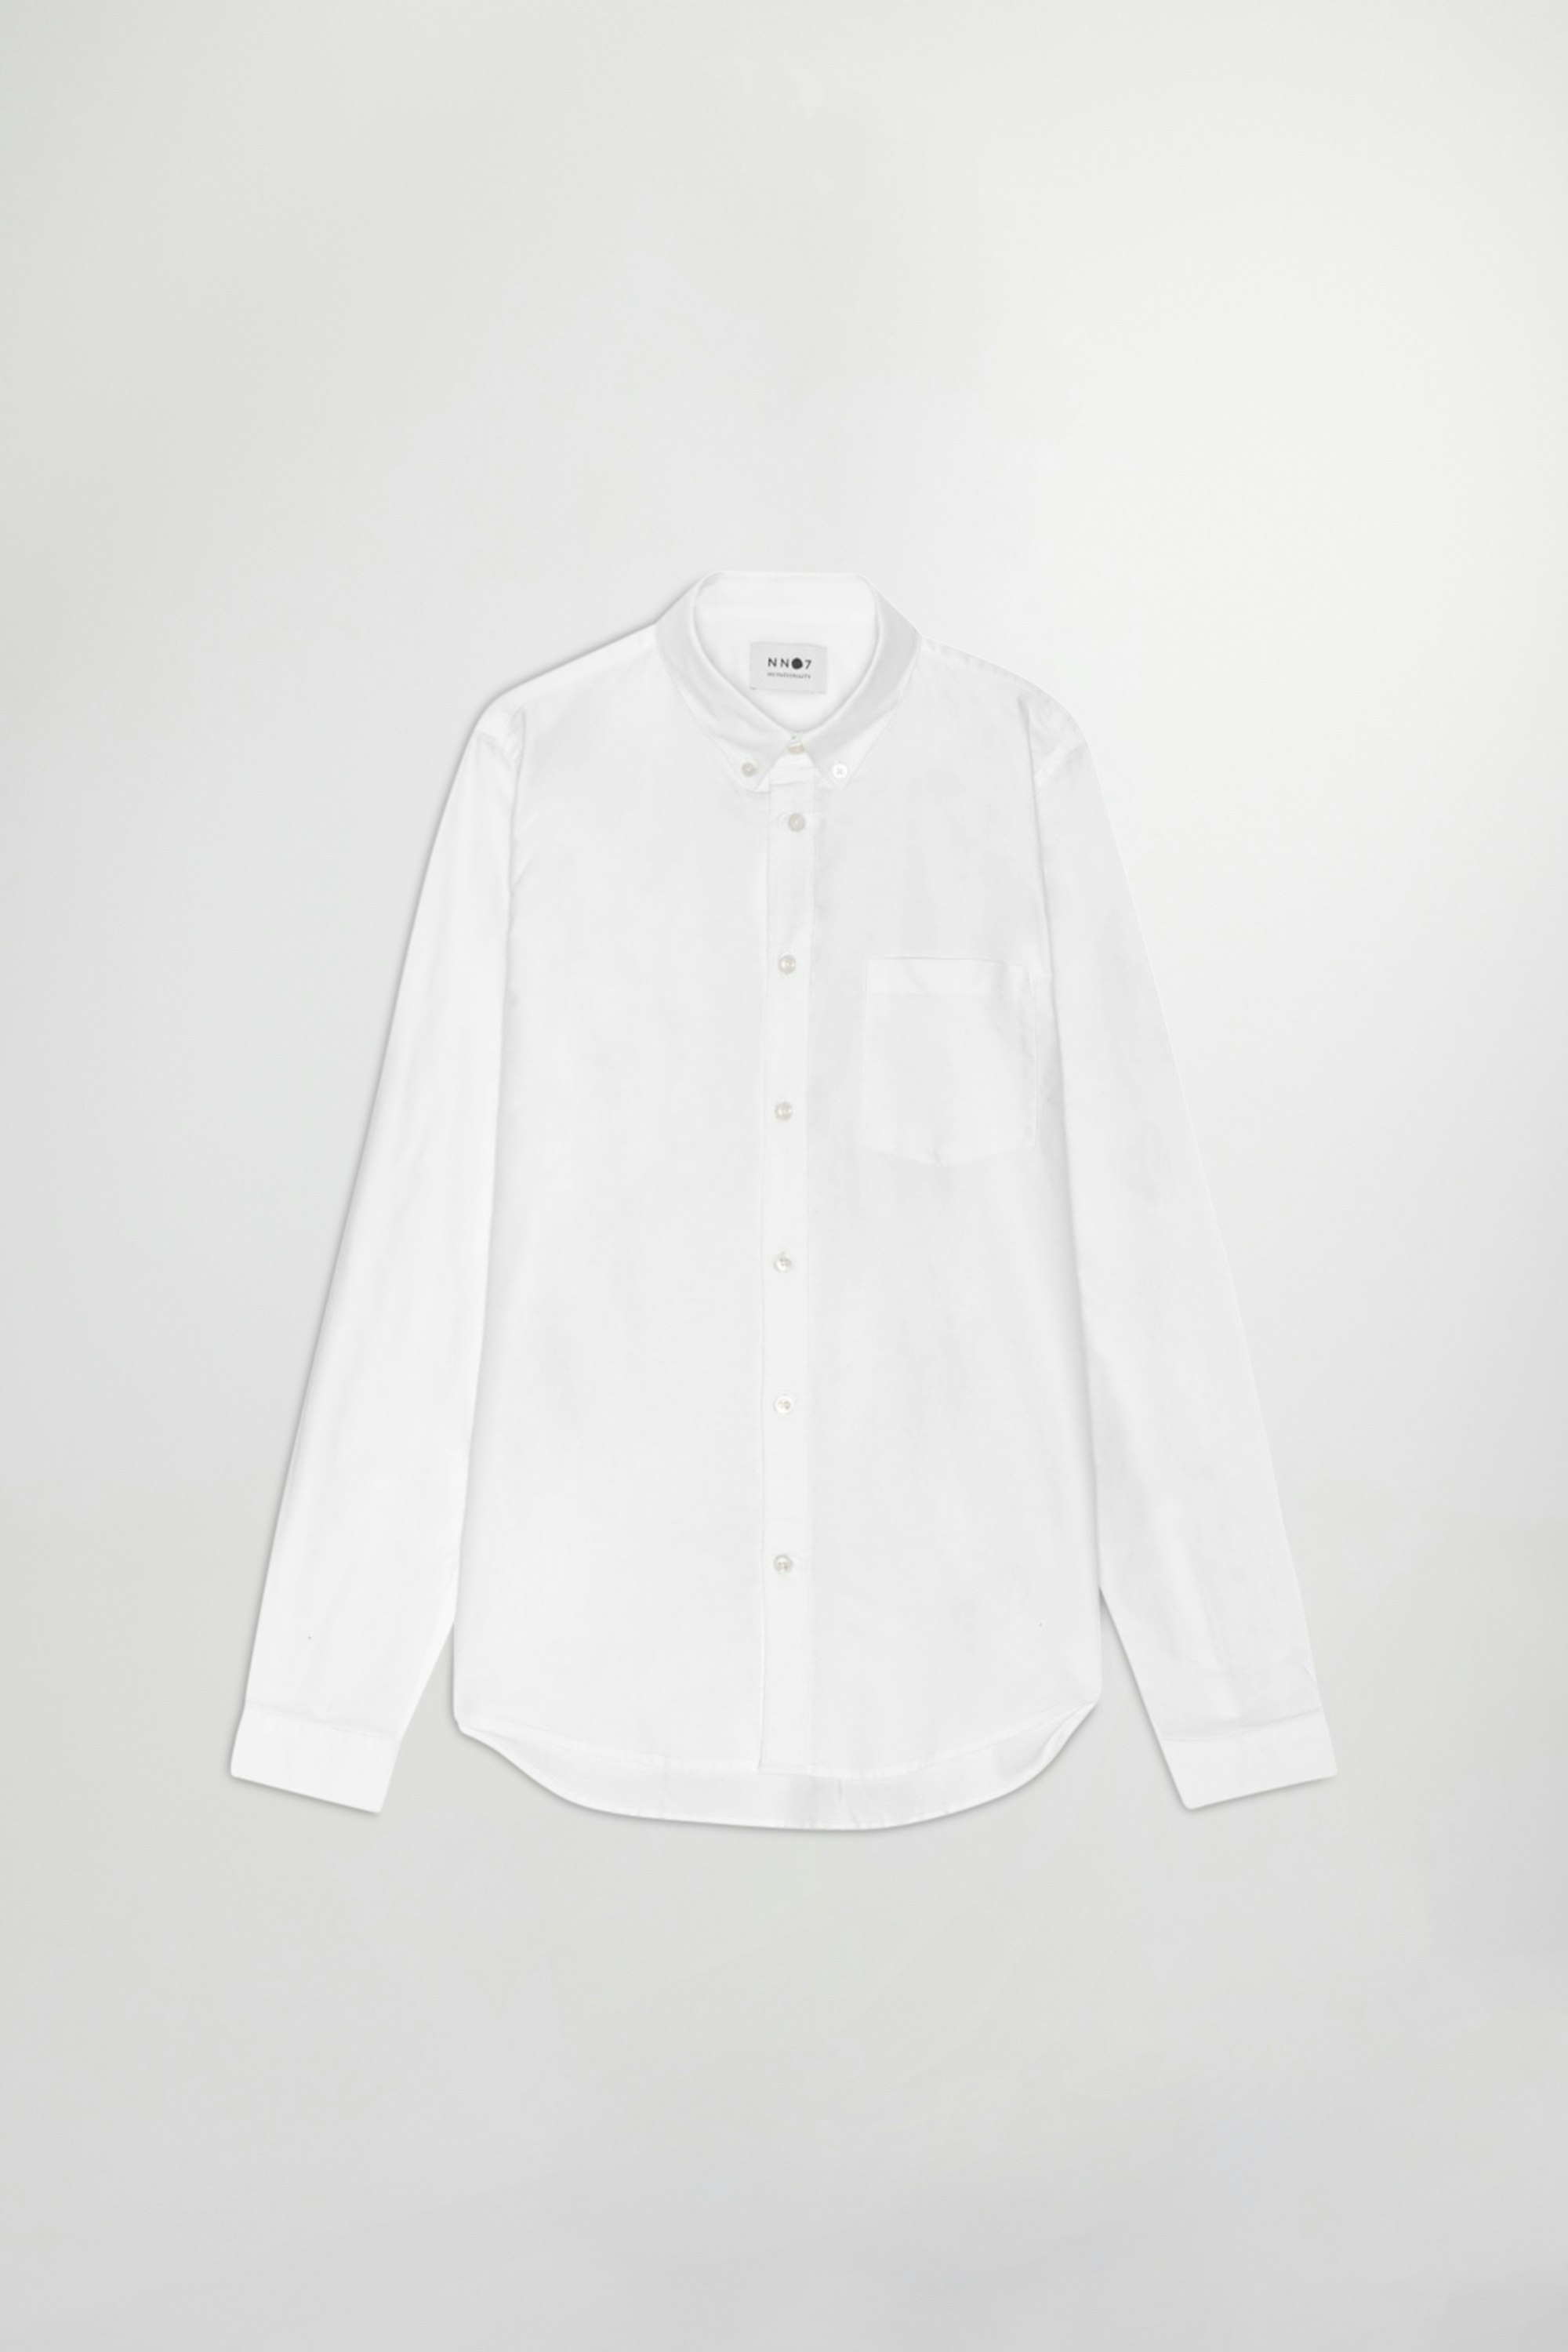 Buy at Sixten men\'s - White online 5677 - shirt